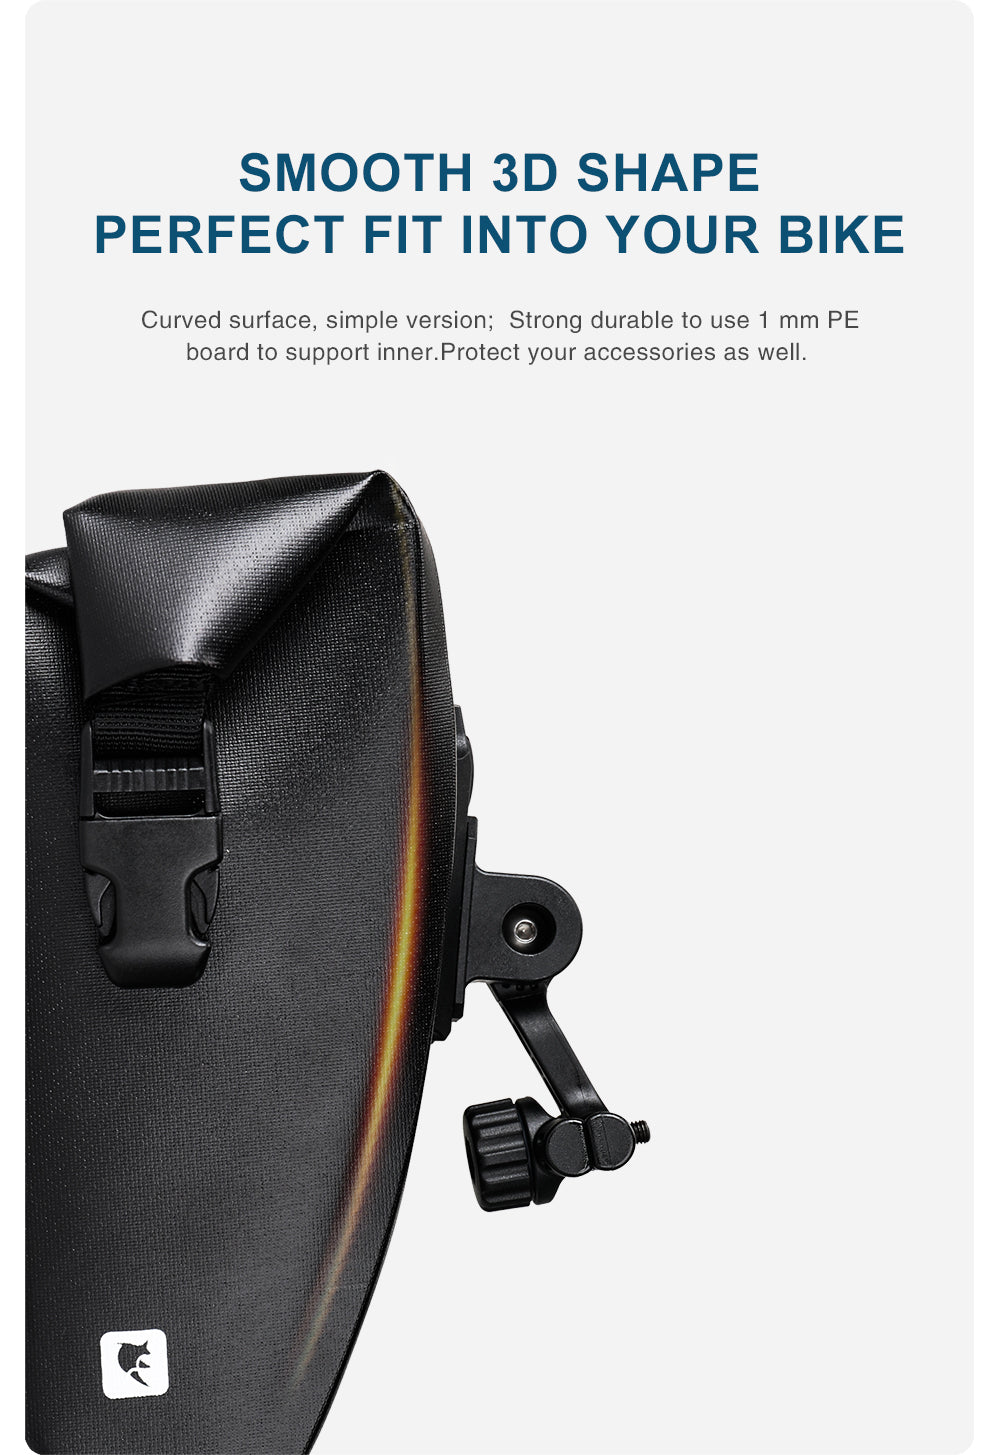 Waterproof 1.2 Liter Bike Saddle Bag with Mounting